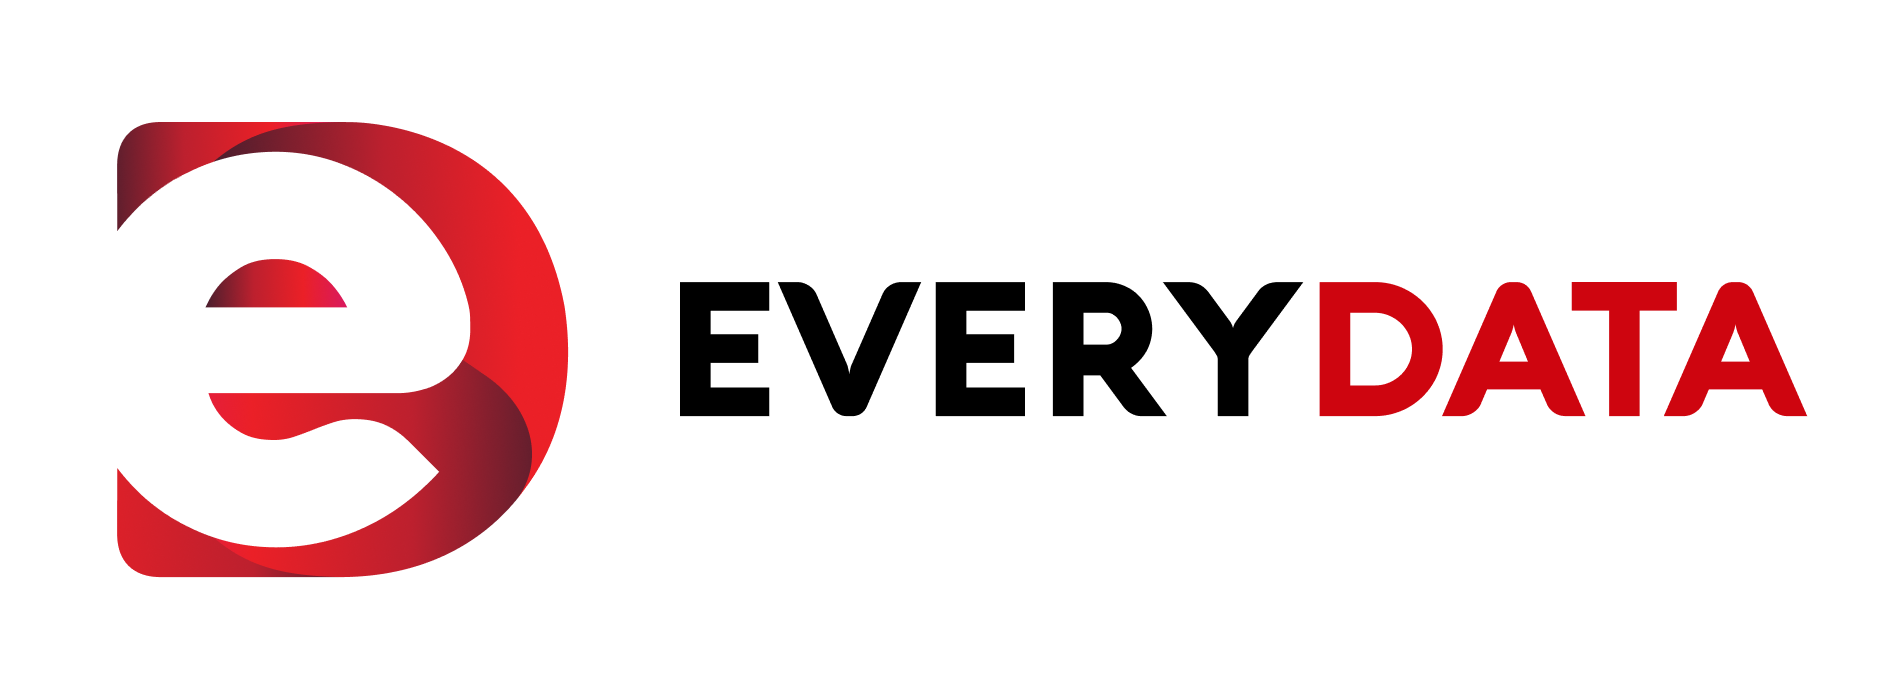 full-logo-horizontal-red-black-2